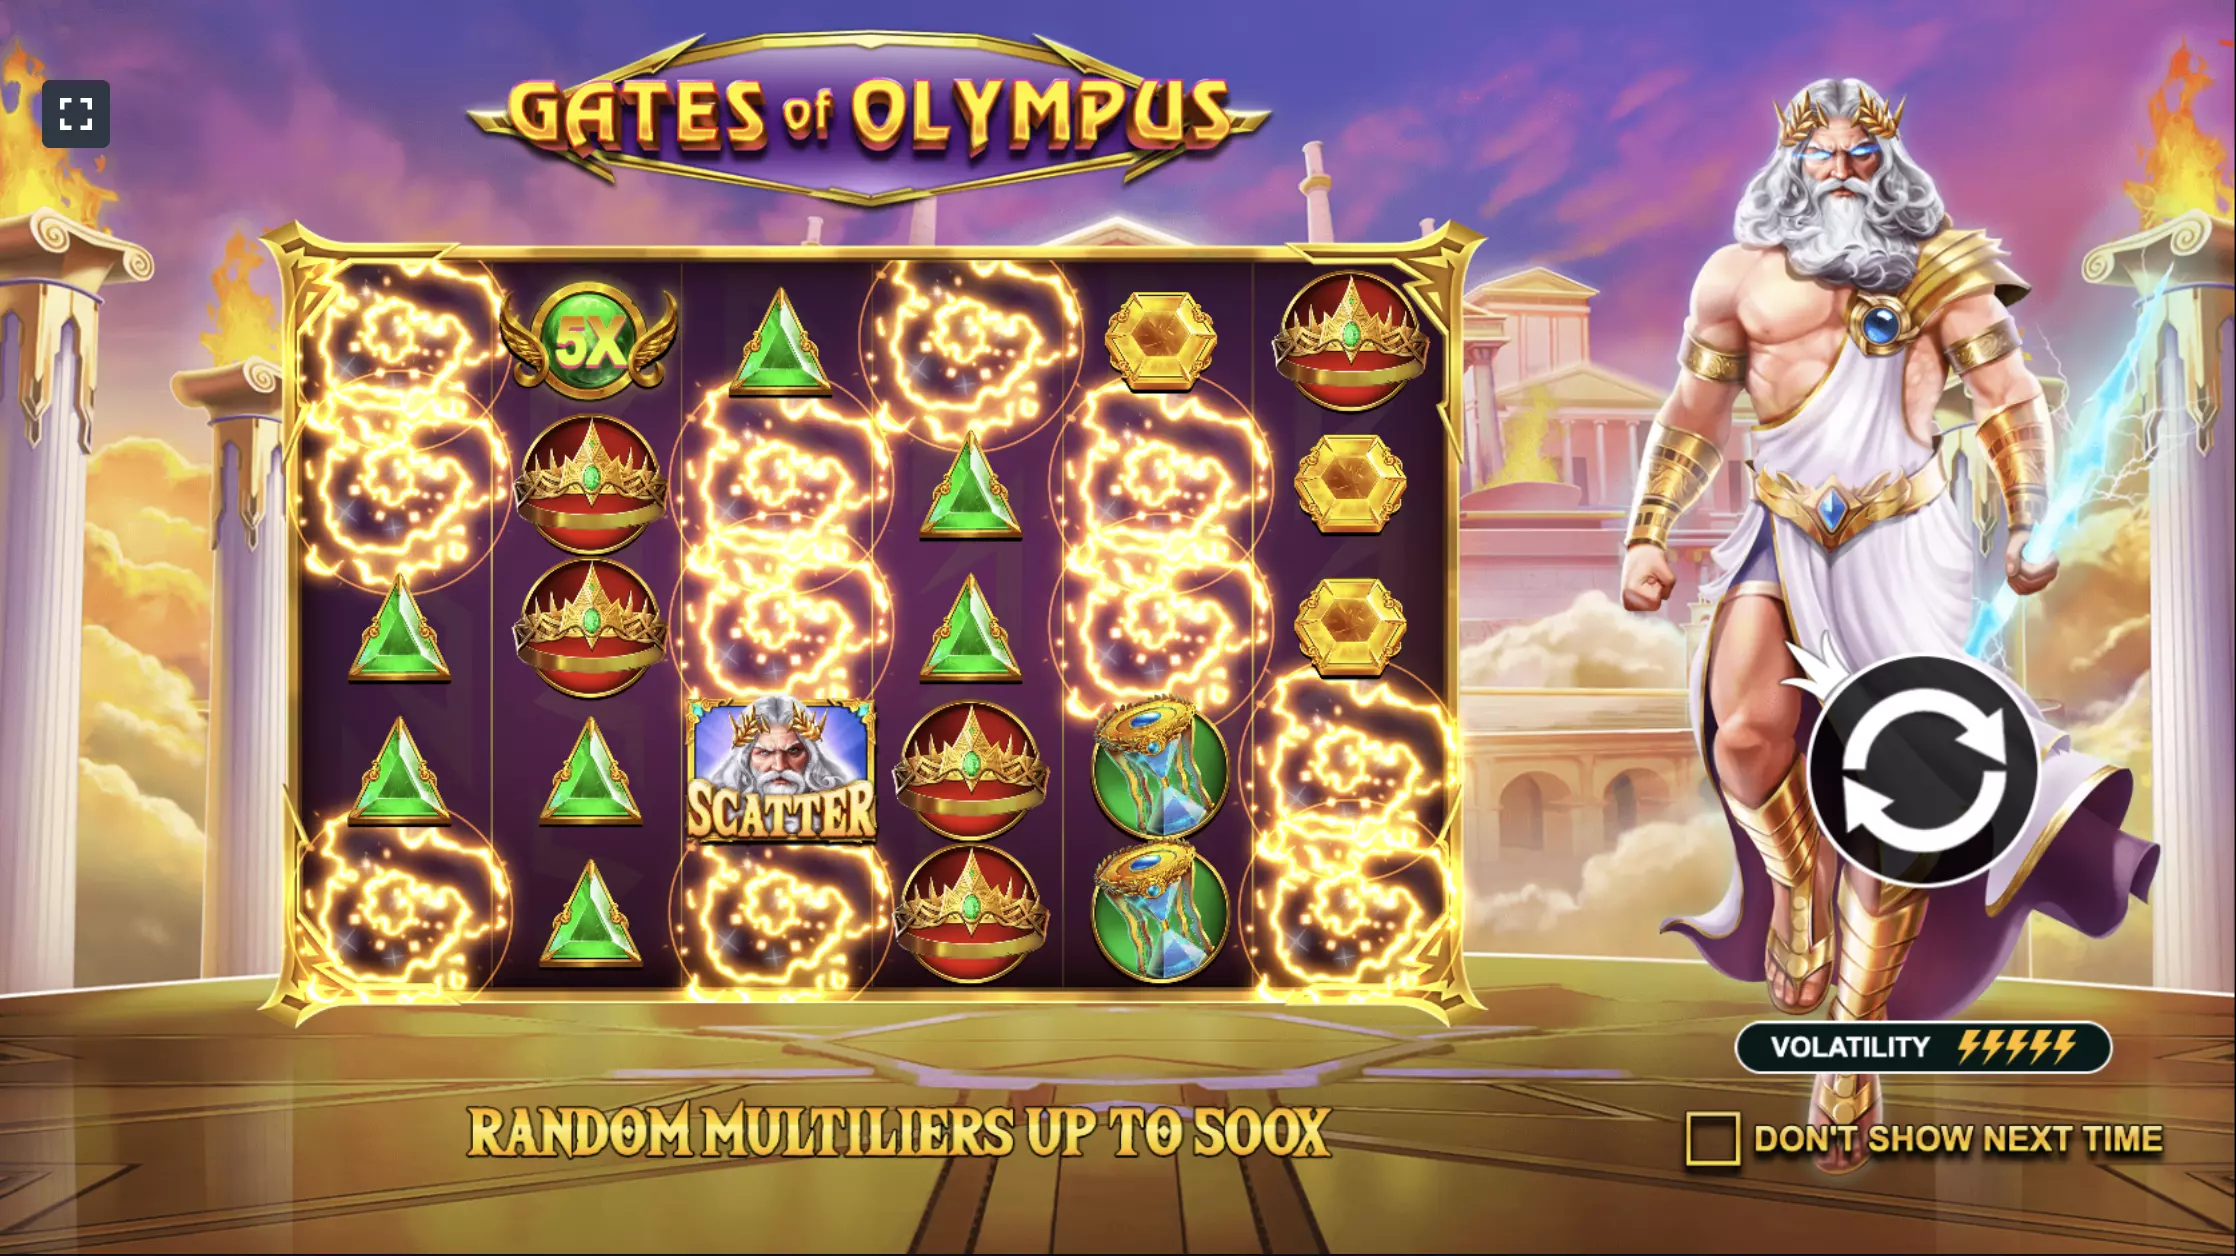 Play gates of olympus slot